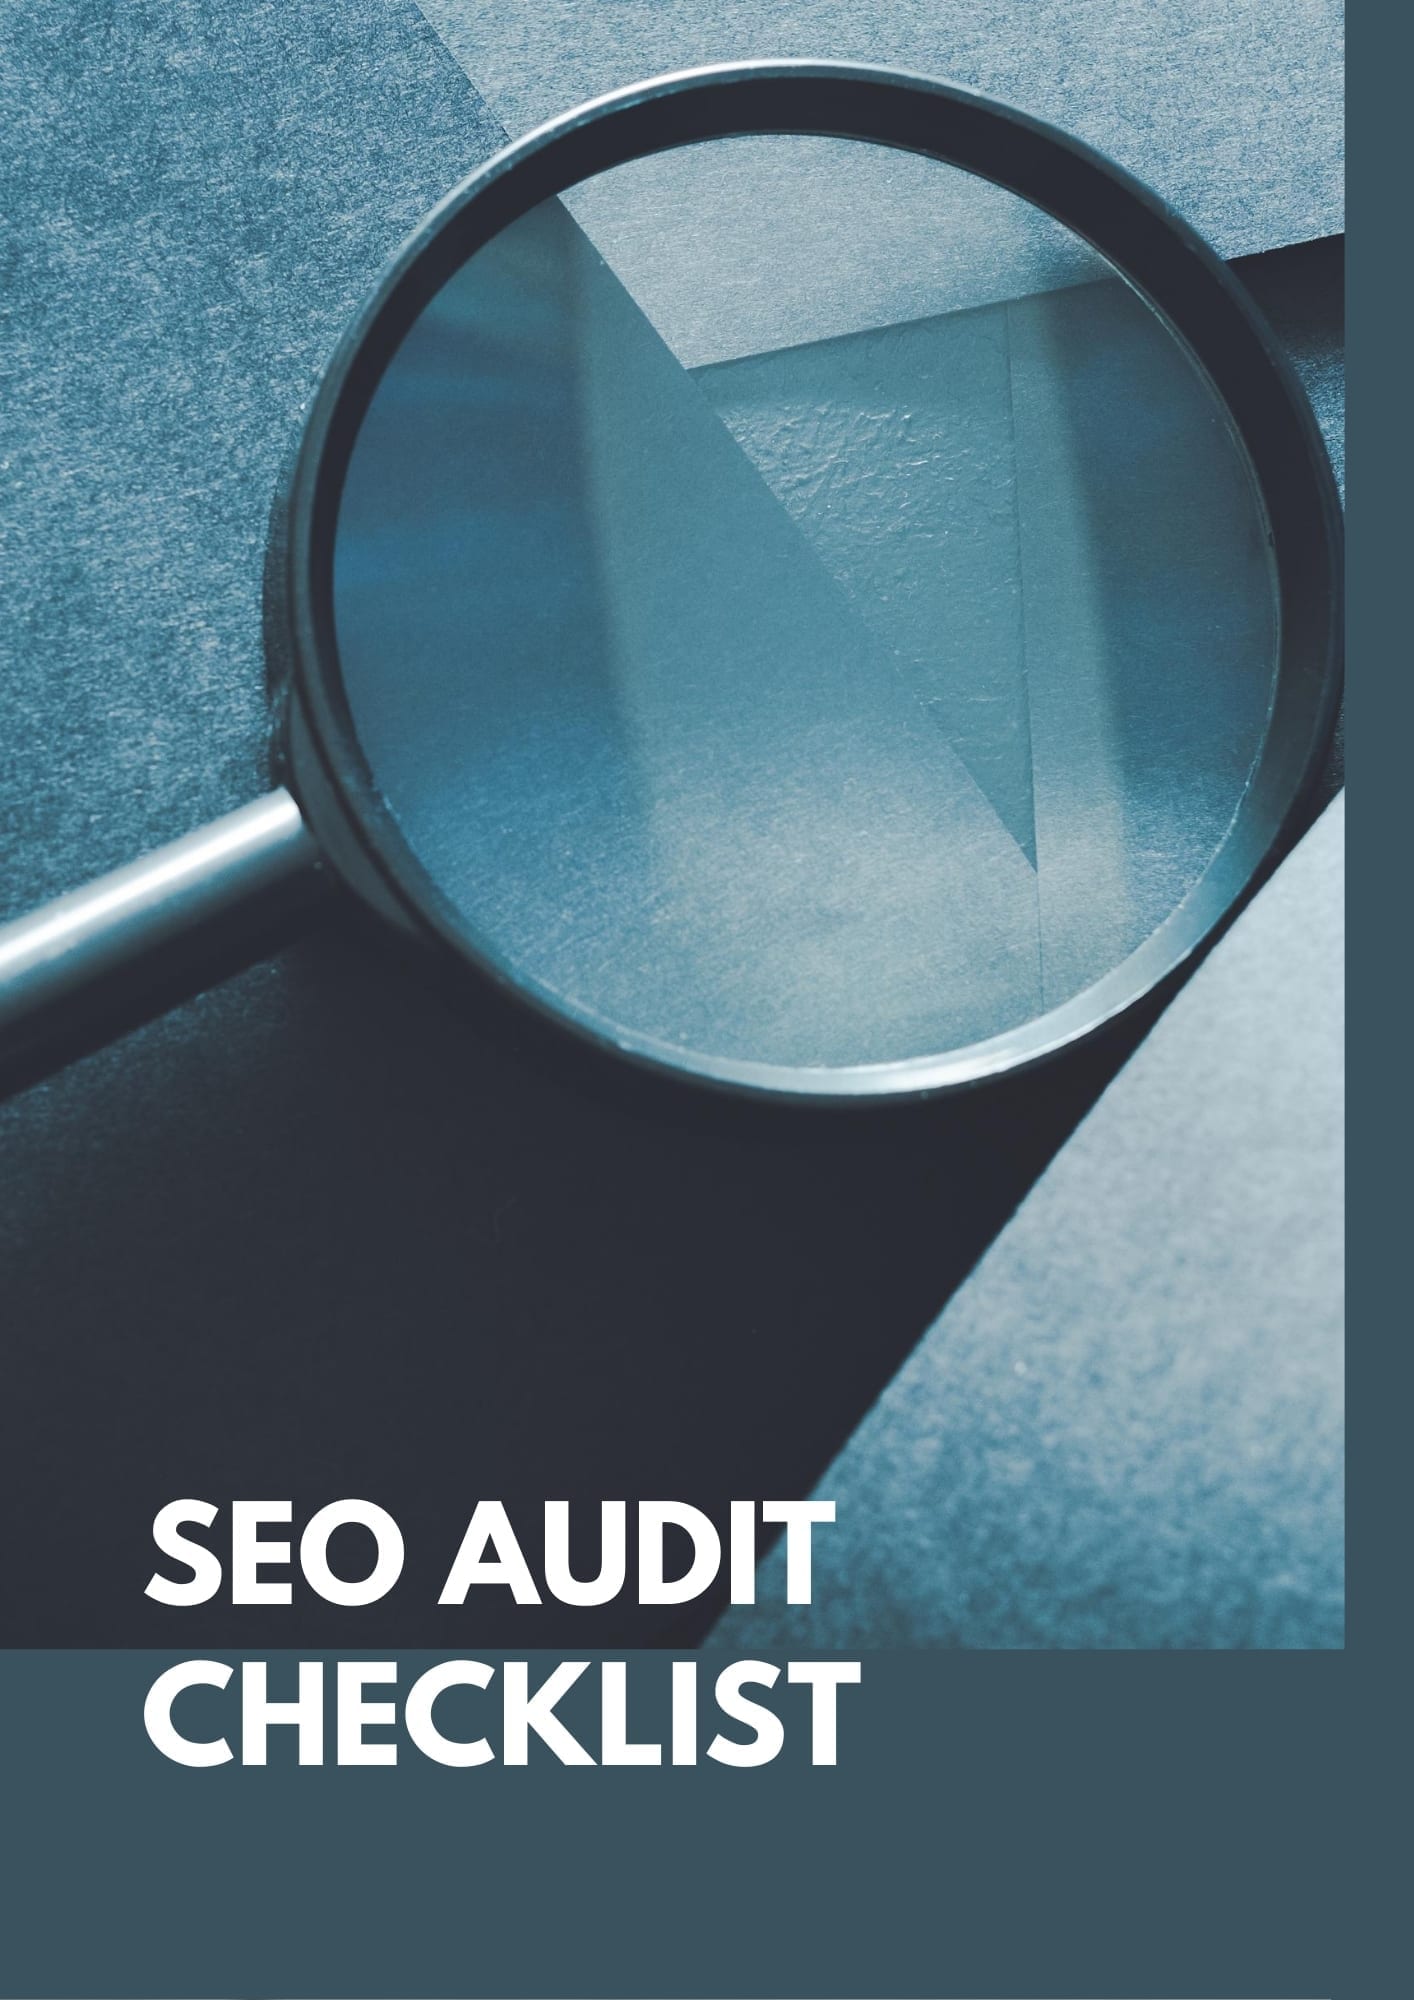 seo audit checklist by nexis novus technology